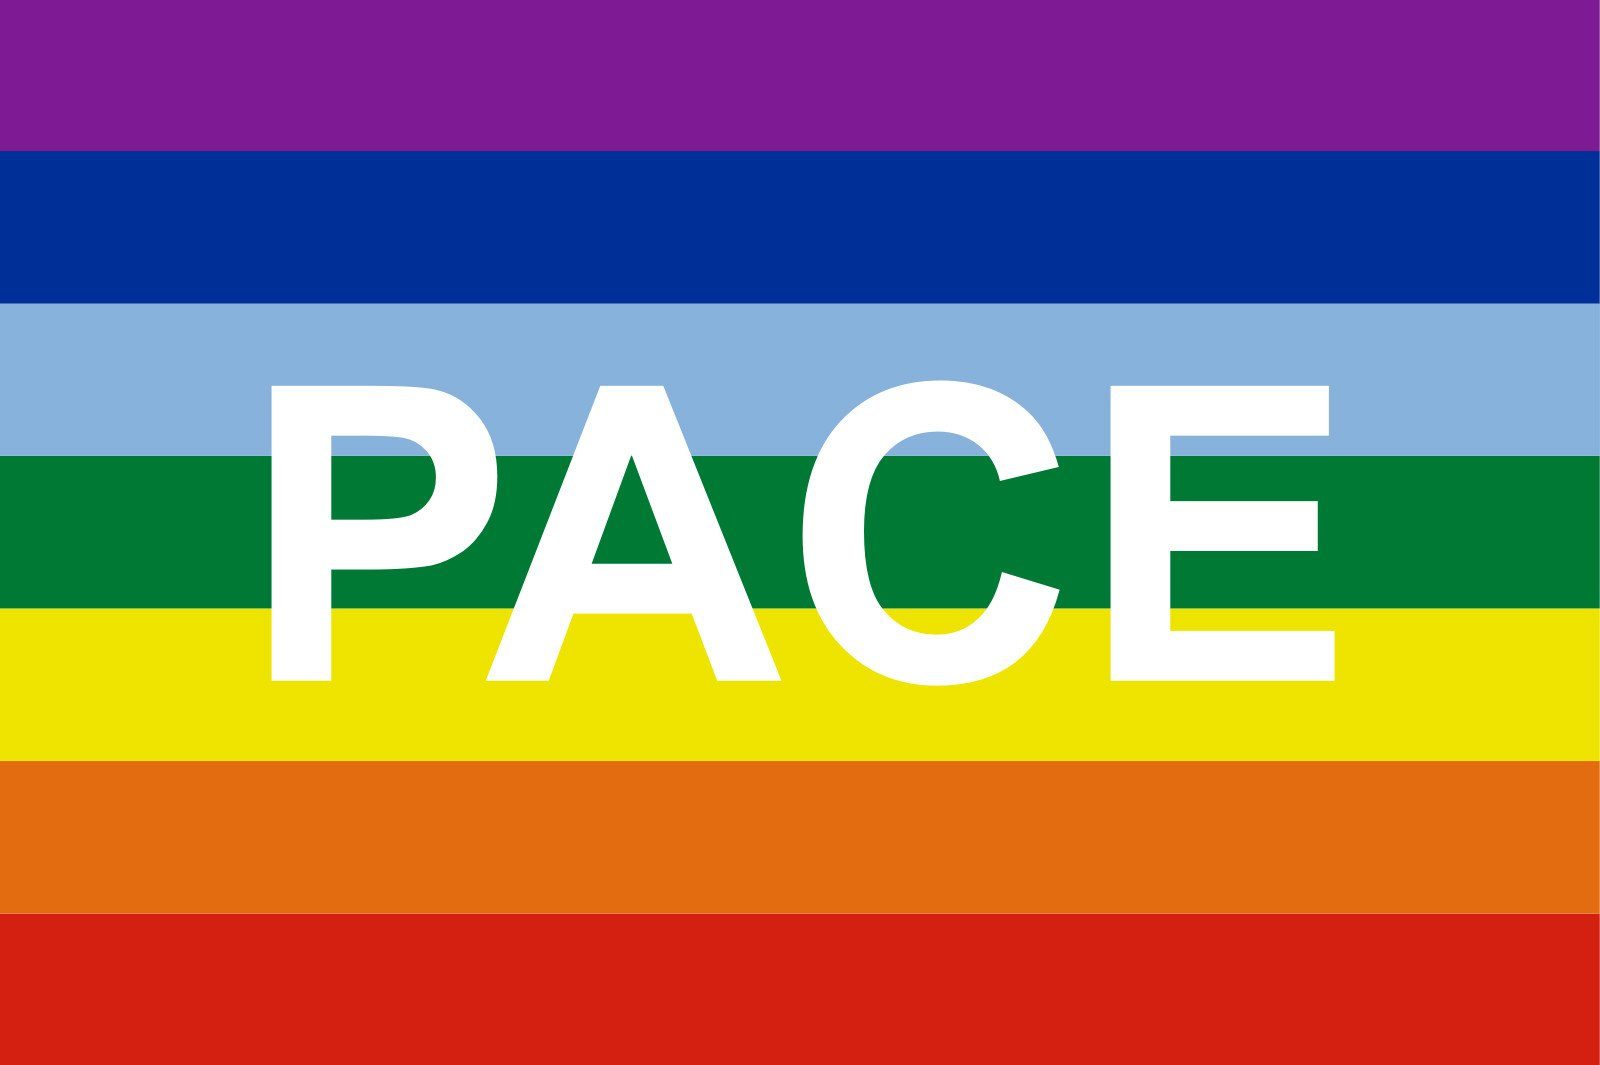 Pace Flagge flaggenmeer g/m² Regenbogen 110 Flagge Querformat